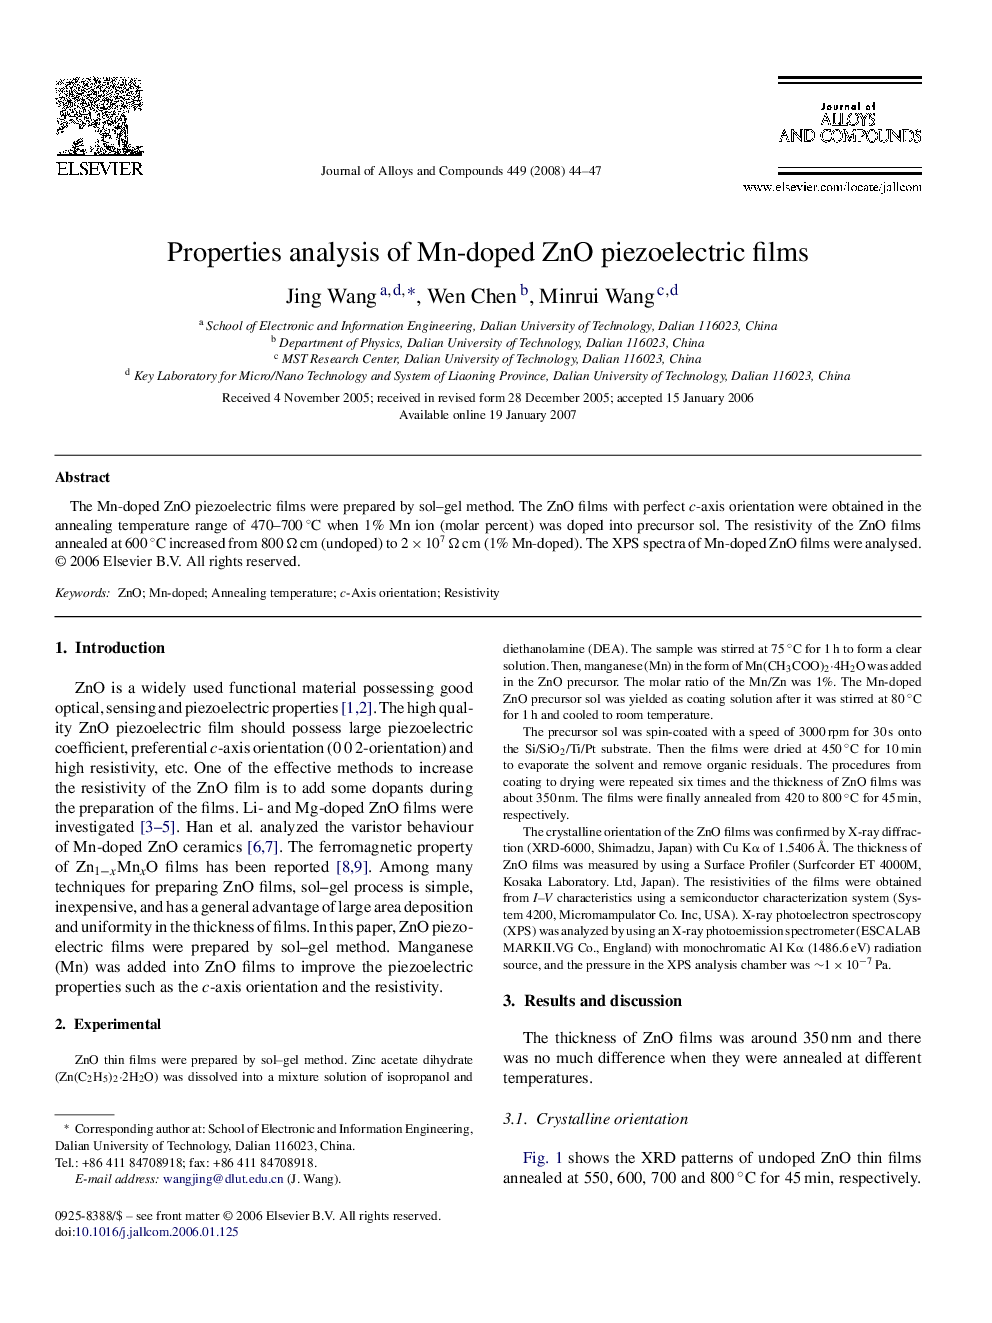 Properties analysis of Mn-doped ZnO piezoelectric films